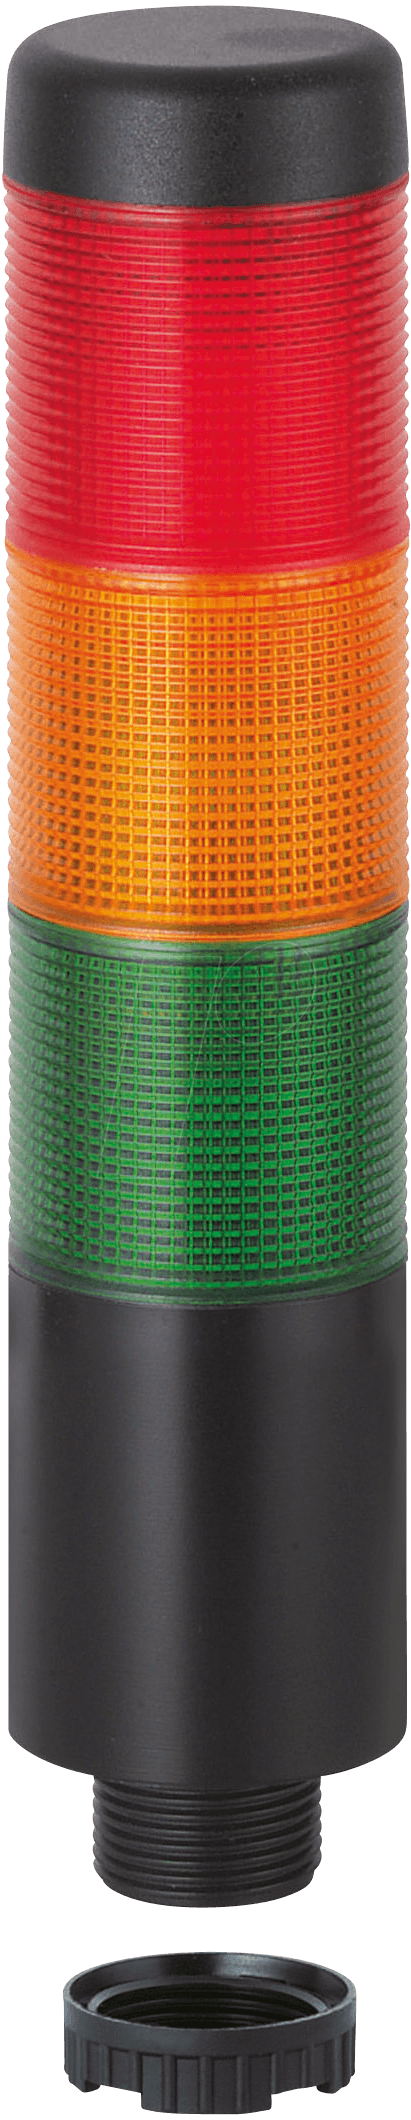 WERMA 698 210 75 - LED-Säule, gn/ge/rt, St, 24 V AC/DC von WERMA SIGNALTECHNIK